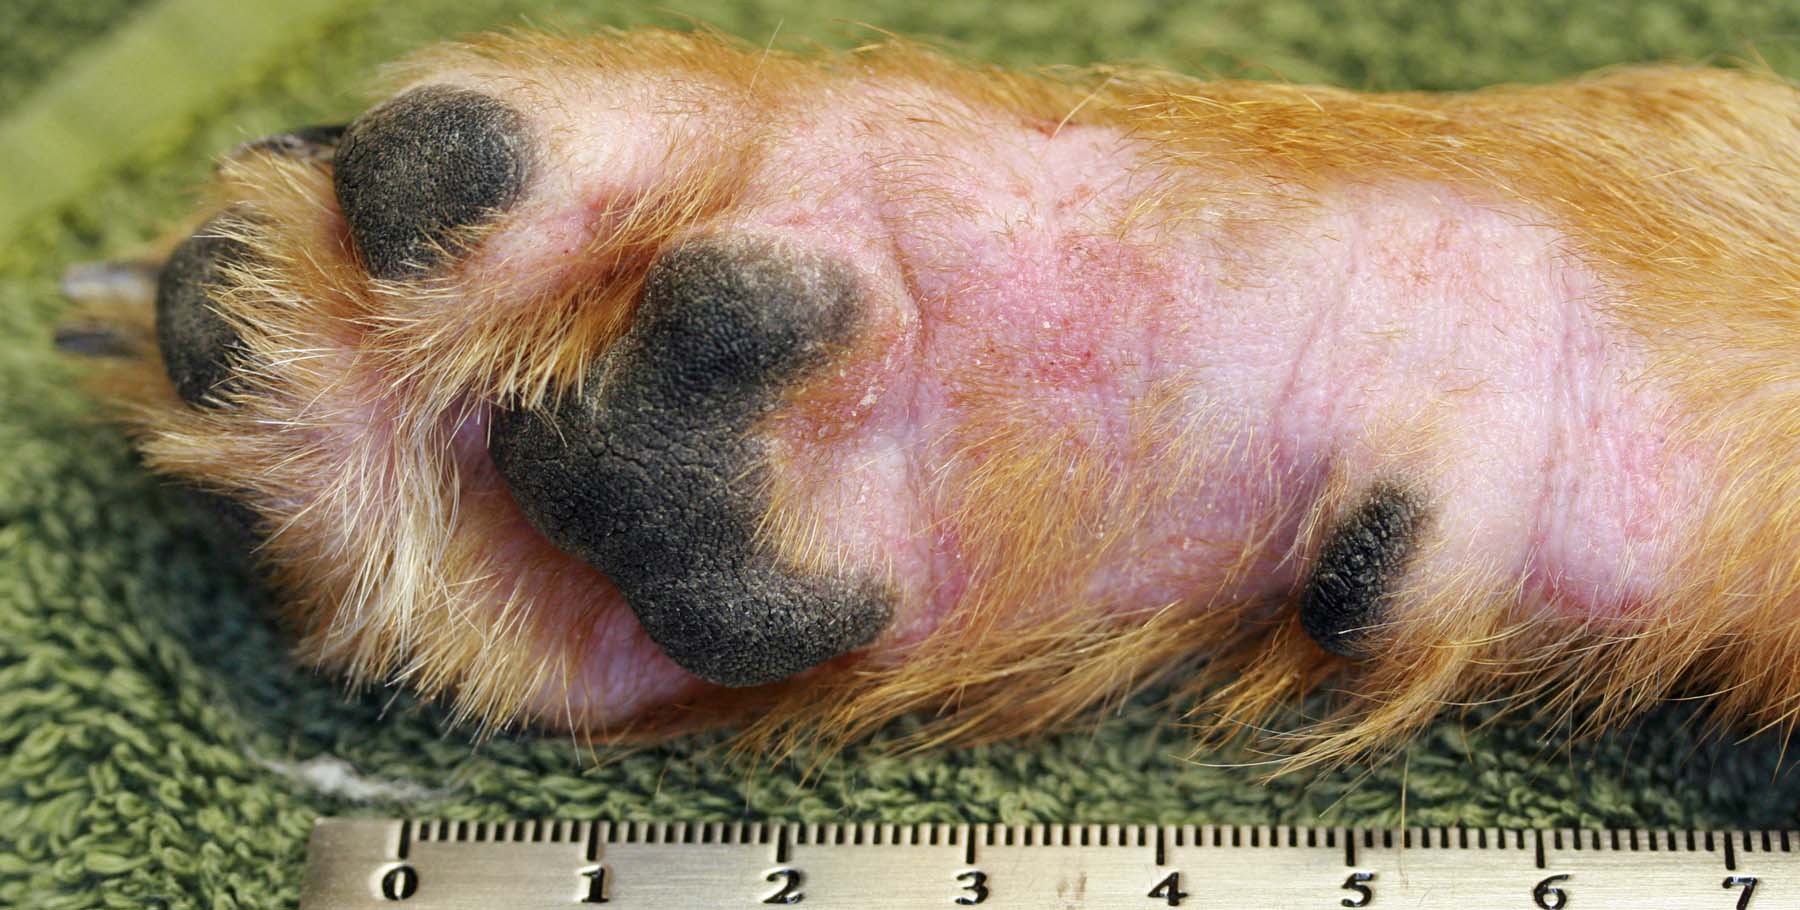 Chronic Atopic Dermatitis: Pododermatitis, Terrier crossbreed